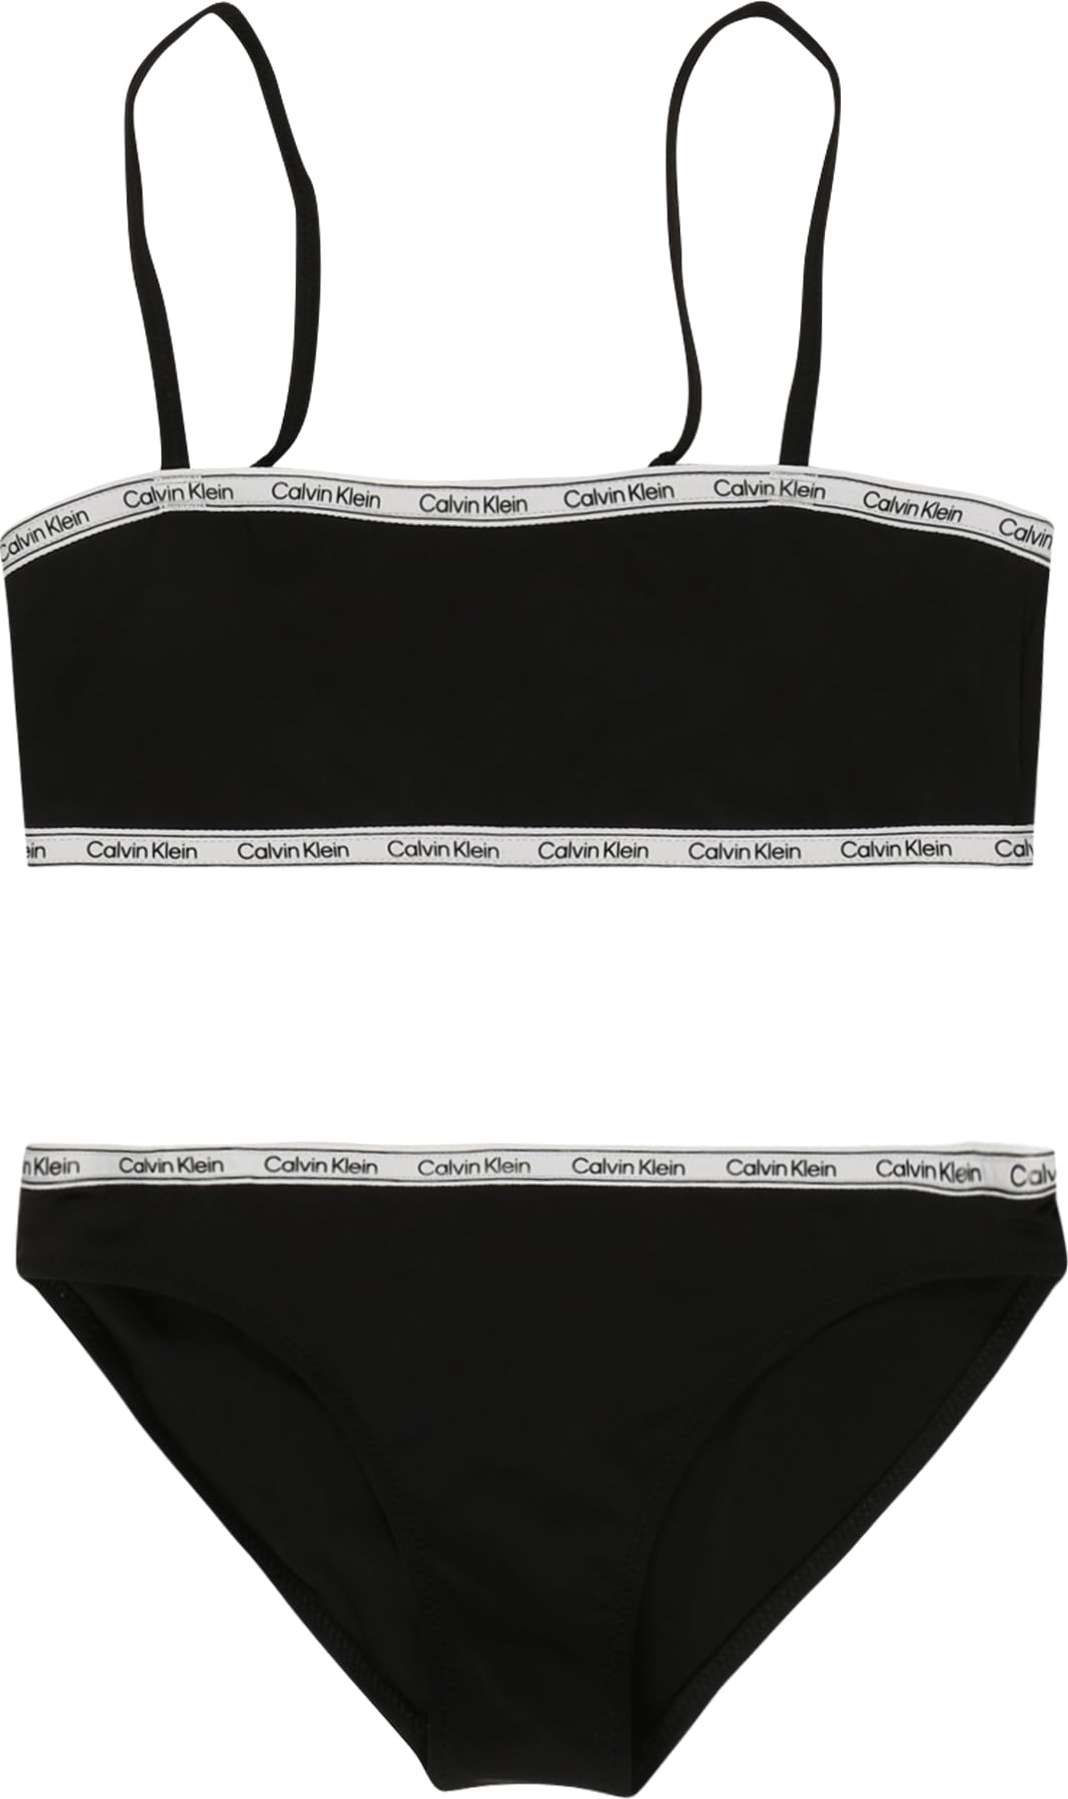 Bikiny Calvin Klein Swimwear černá / bílá